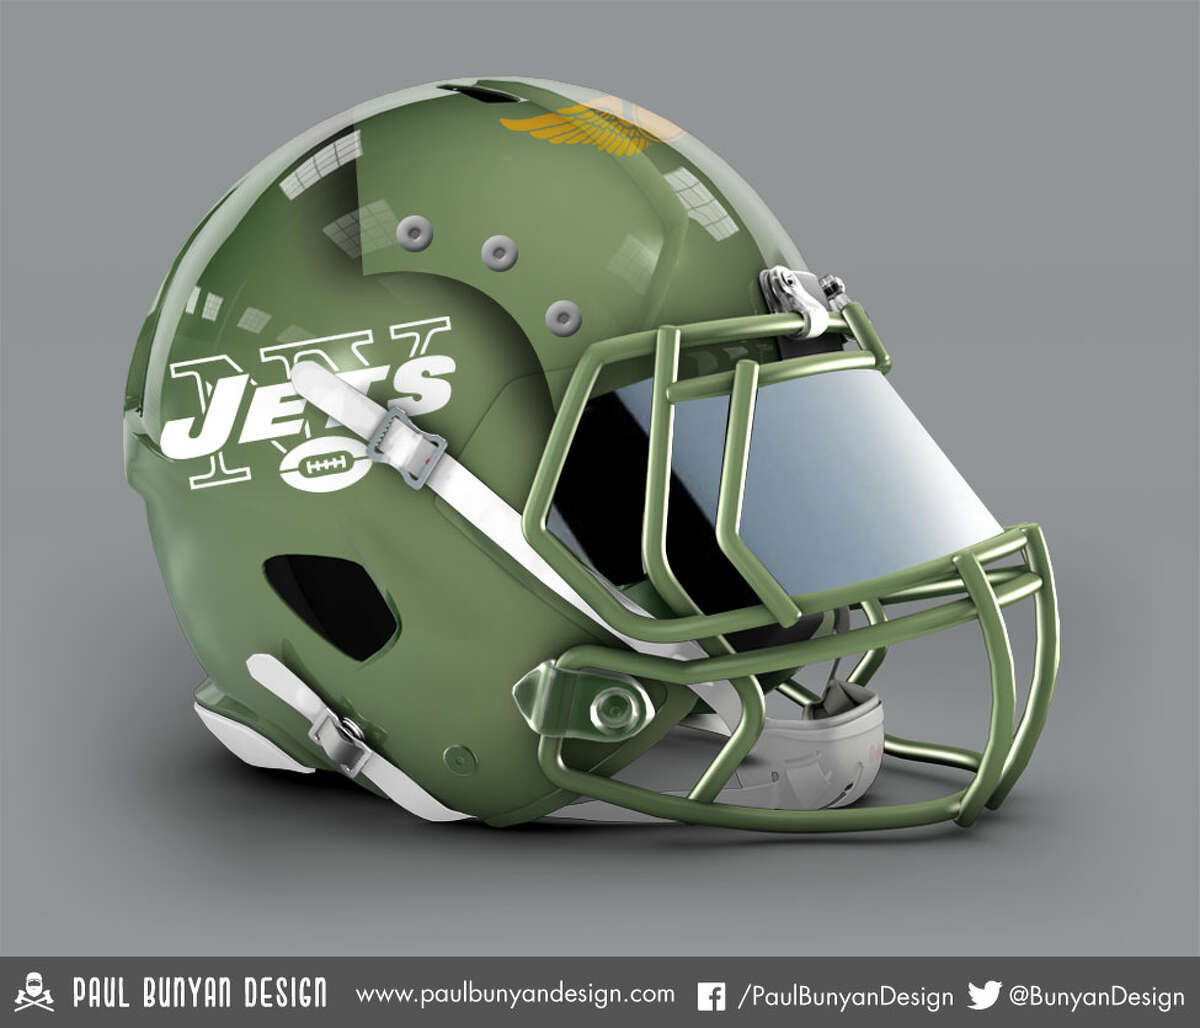 New York Jets concept helmet by Paul Bunyan Design